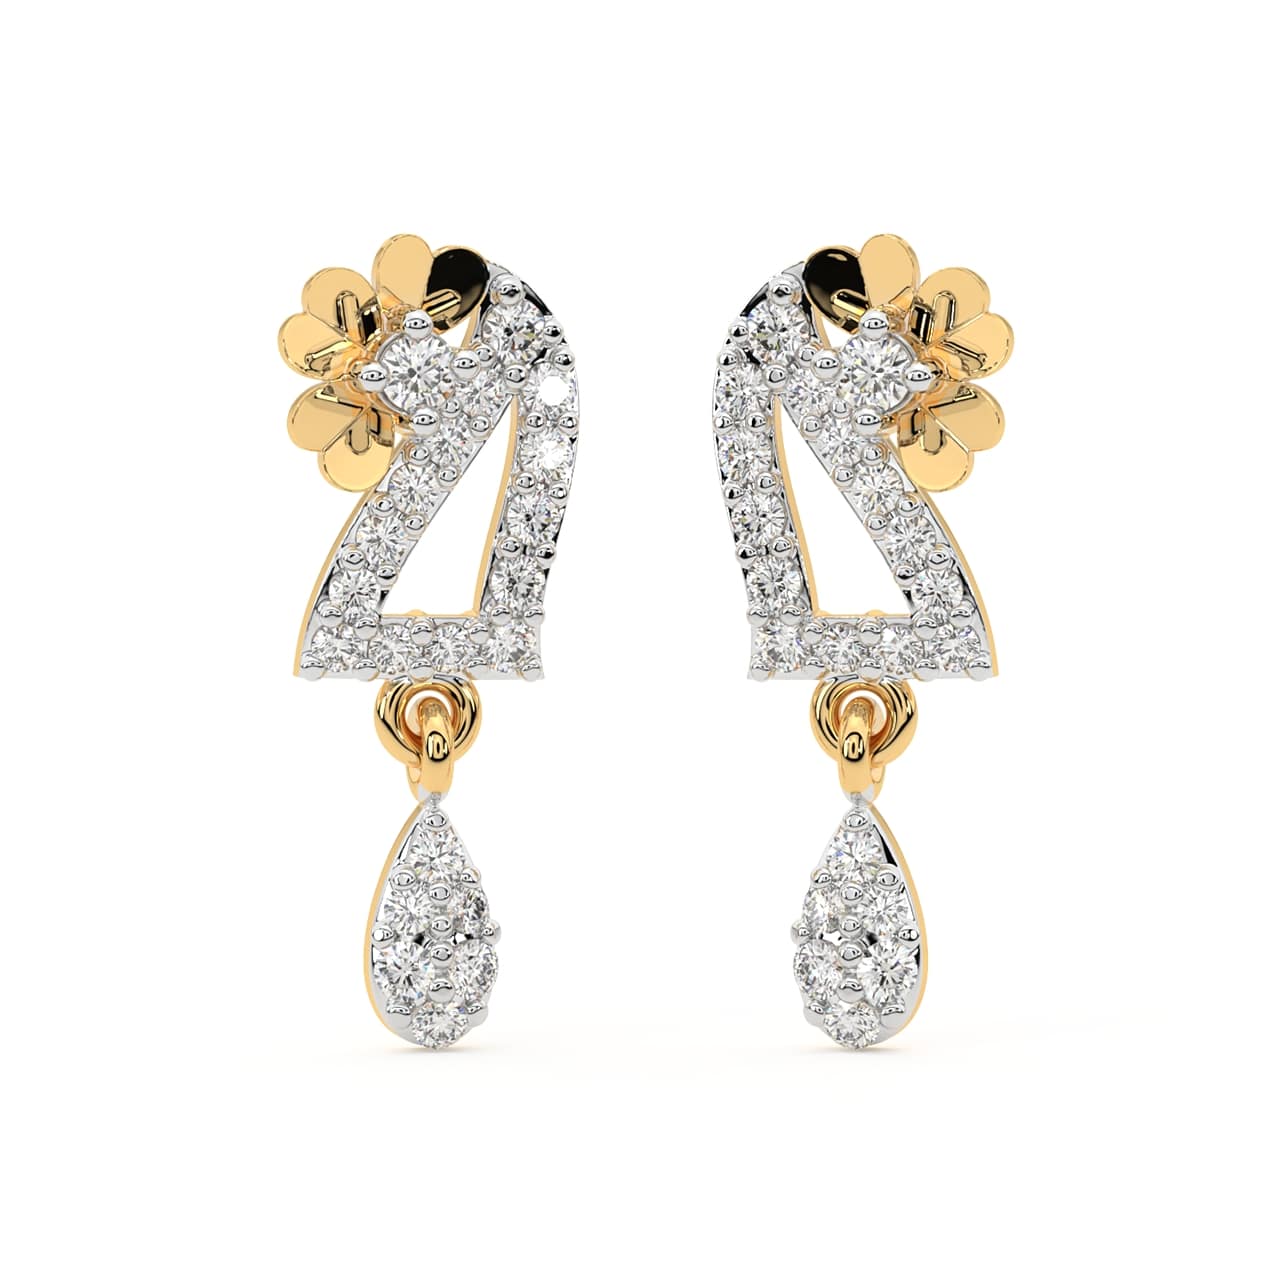 Eder Round Diamond Earrings